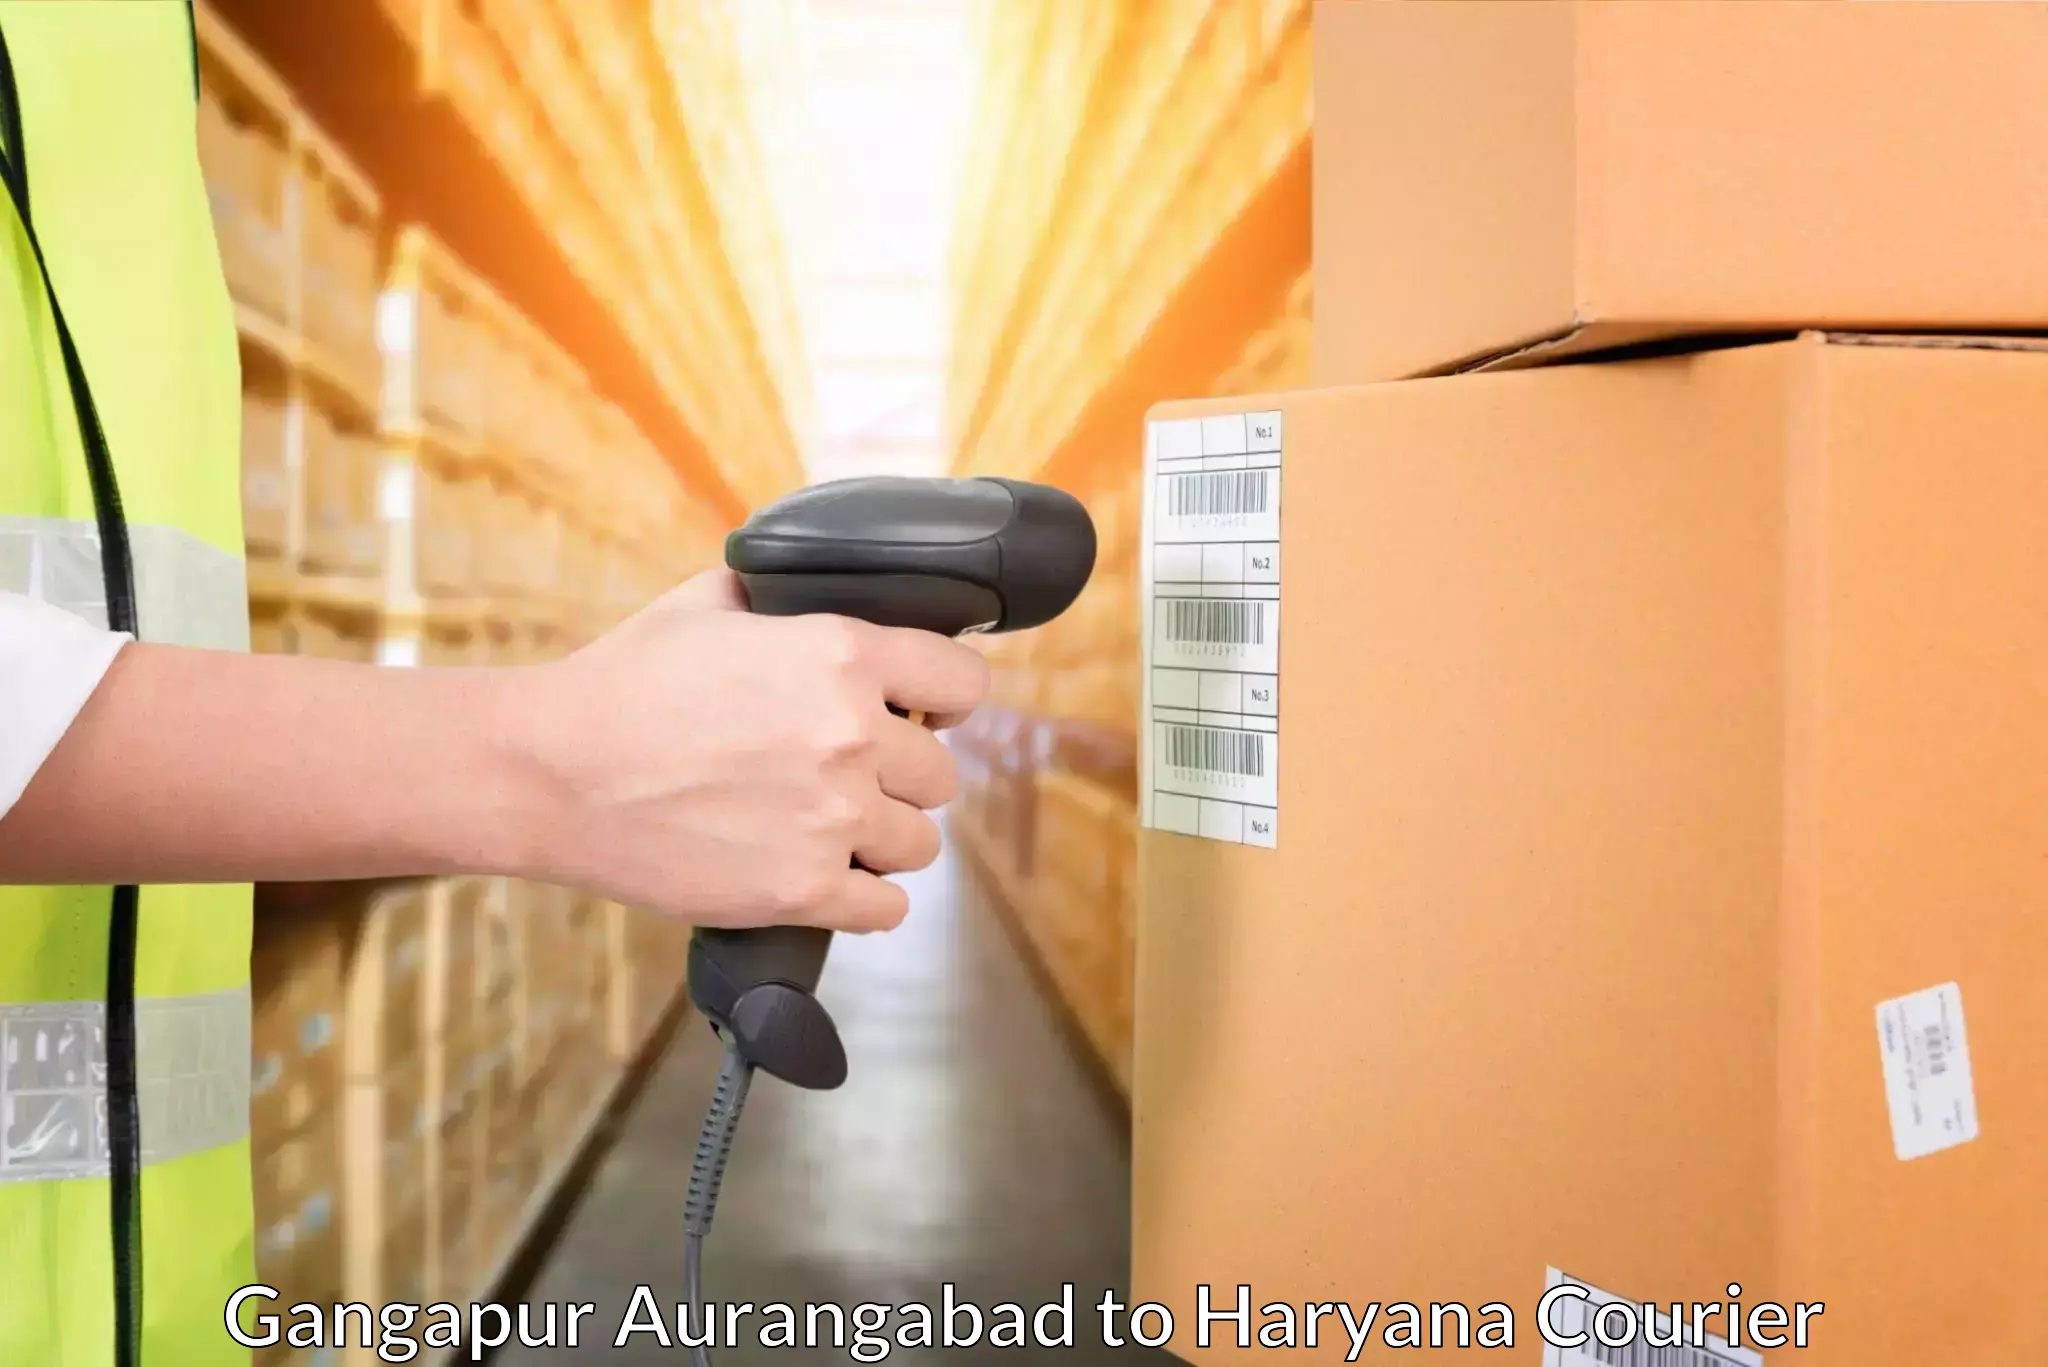 Express delivery capabilities Gangapur Aurangabad to Dharuhera